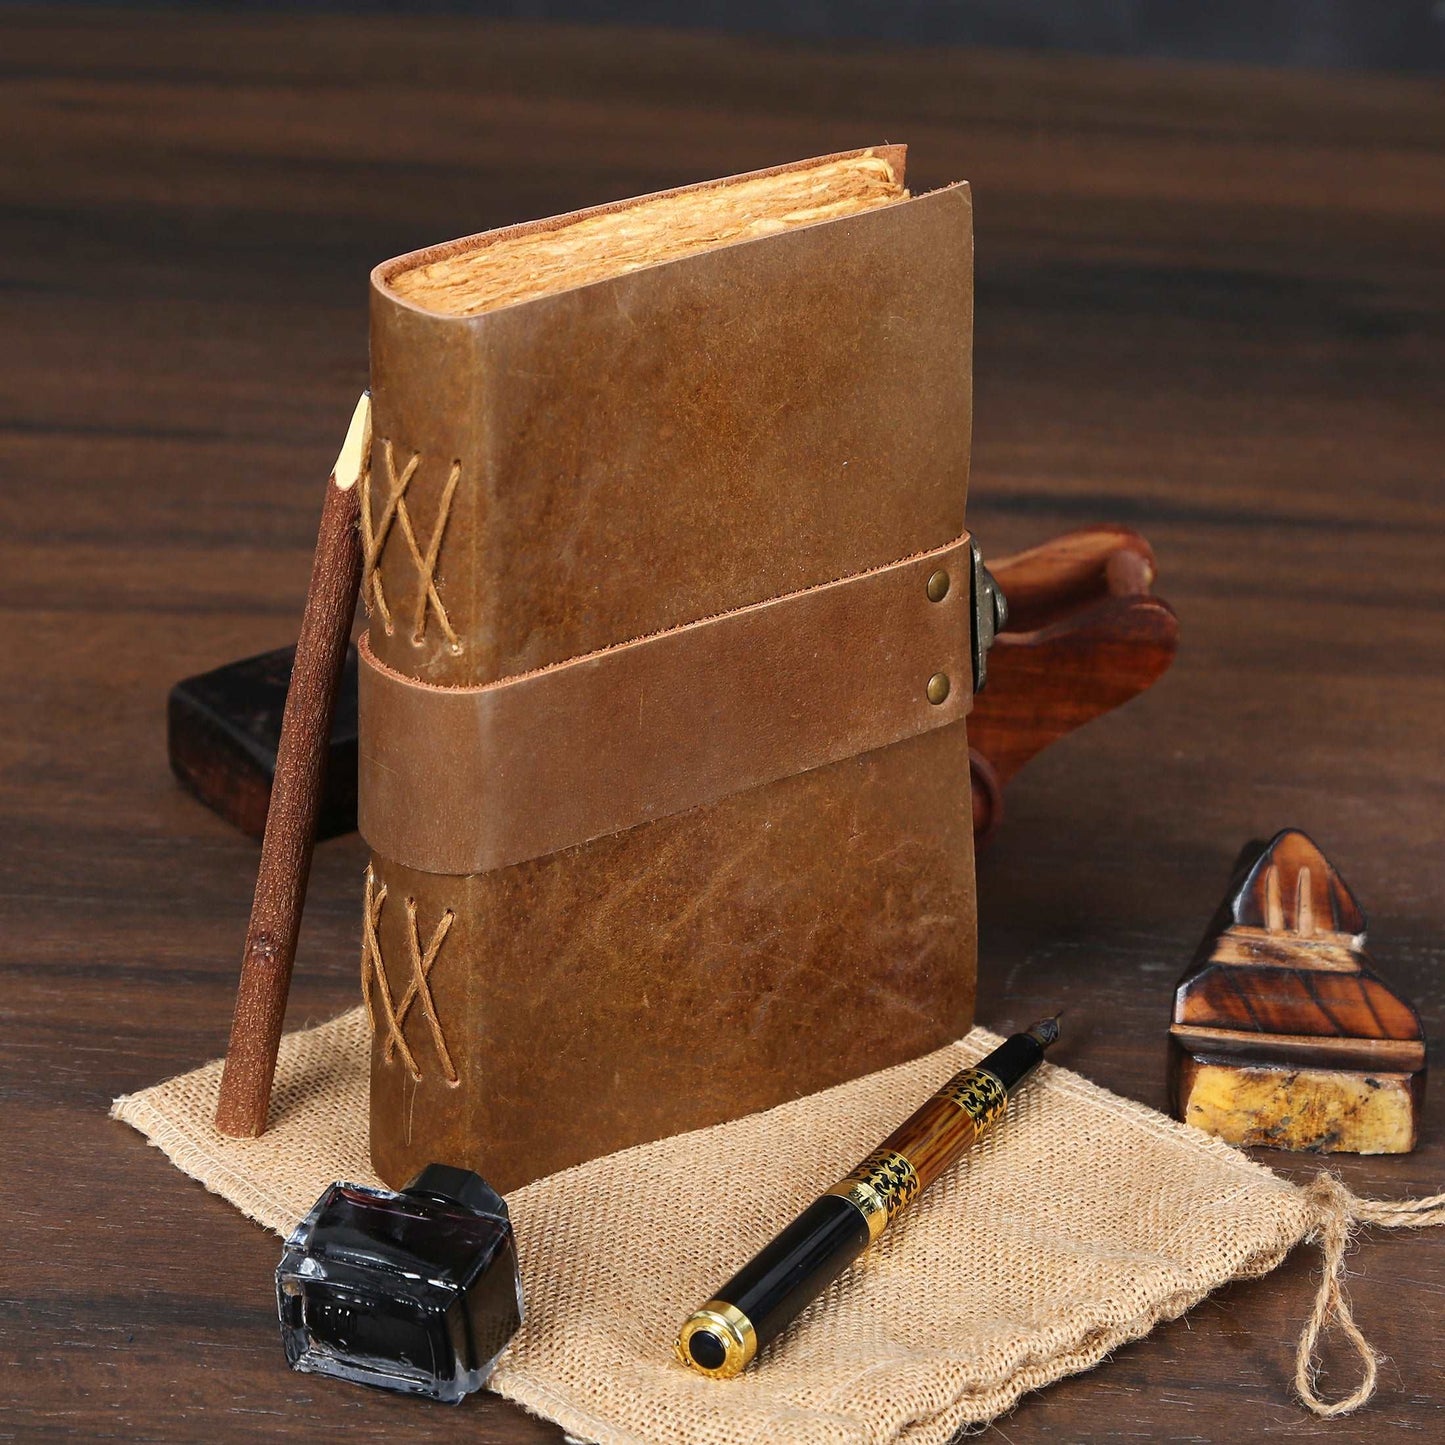 Vintage Leather Journal - Lock Closure - Antique Deckle Edge Handmade Paper - Book of Shadows Journal